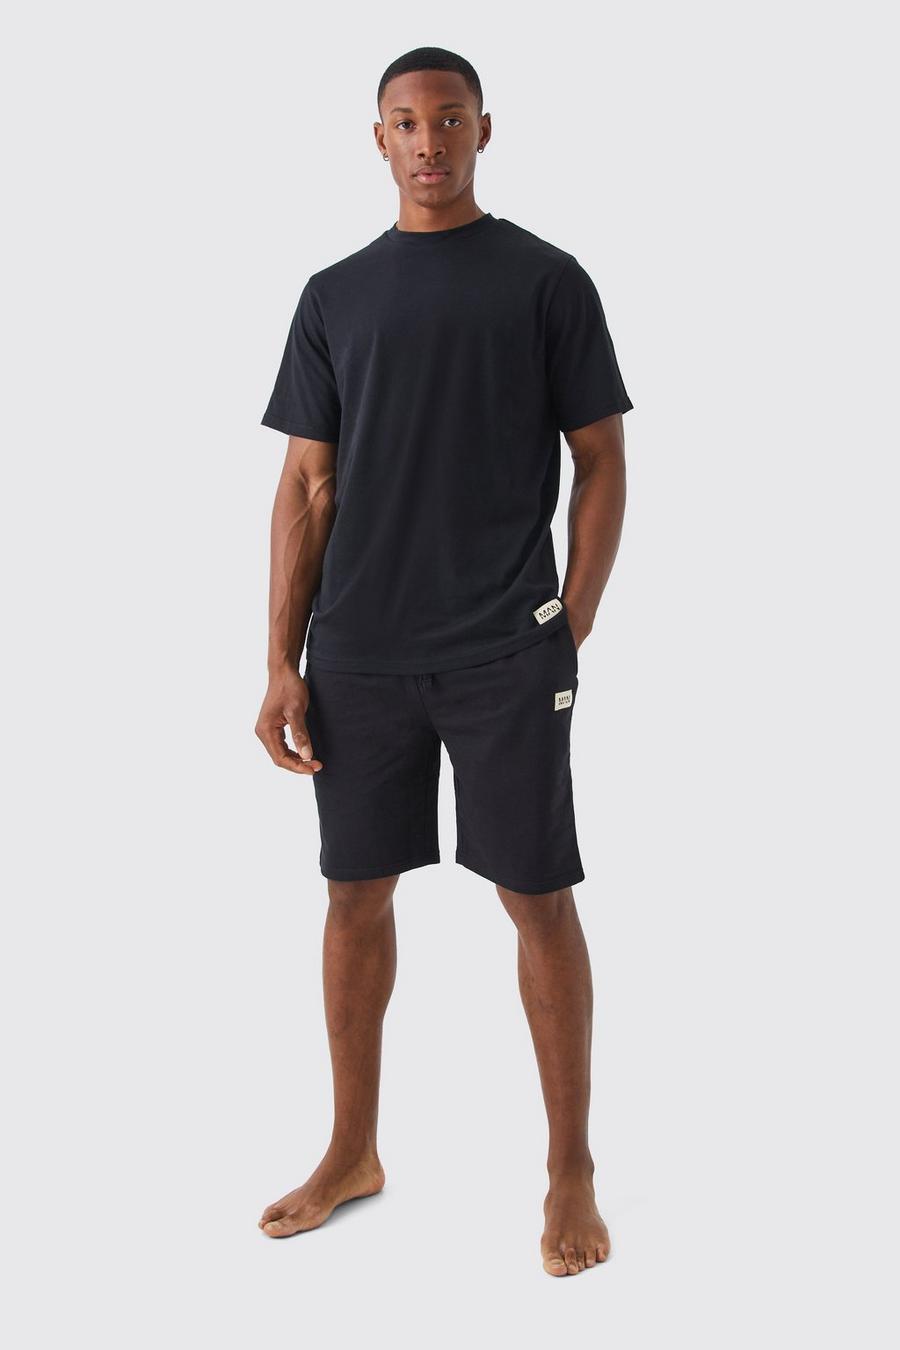 Soft Feel Loungewear Shorts-Set, Black